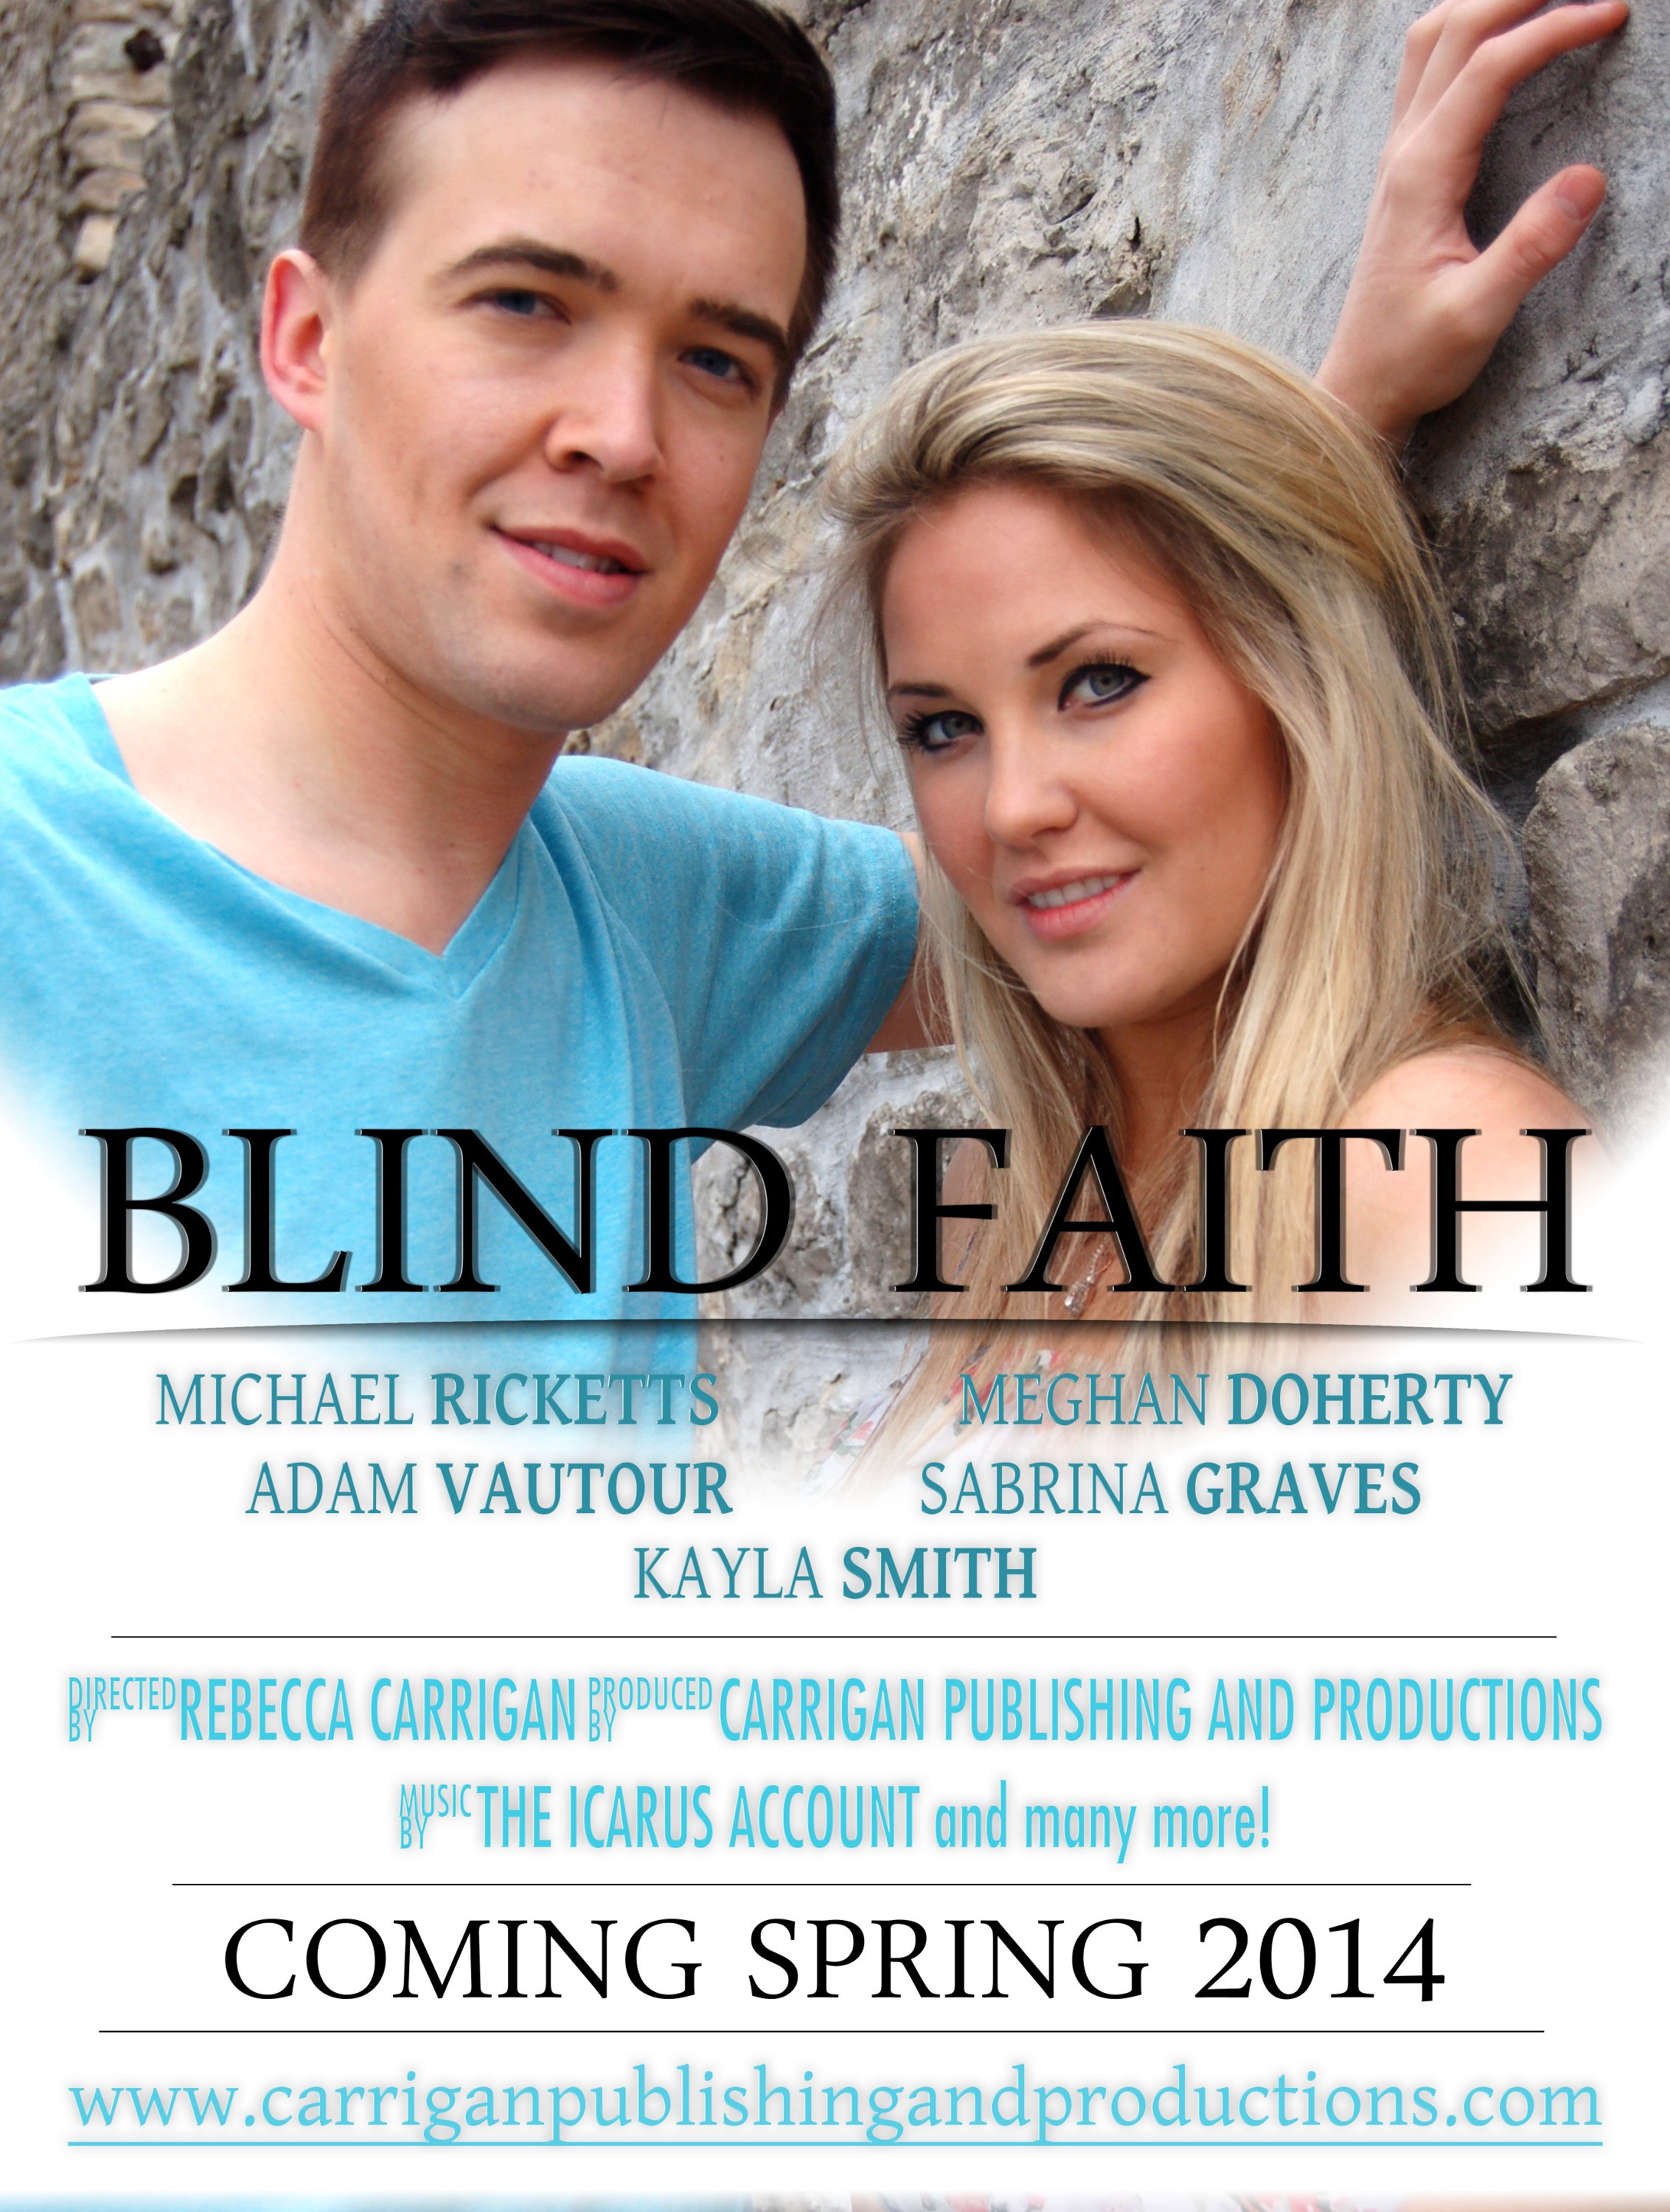 Mega Sized Movie Poster Image for Blind Faith